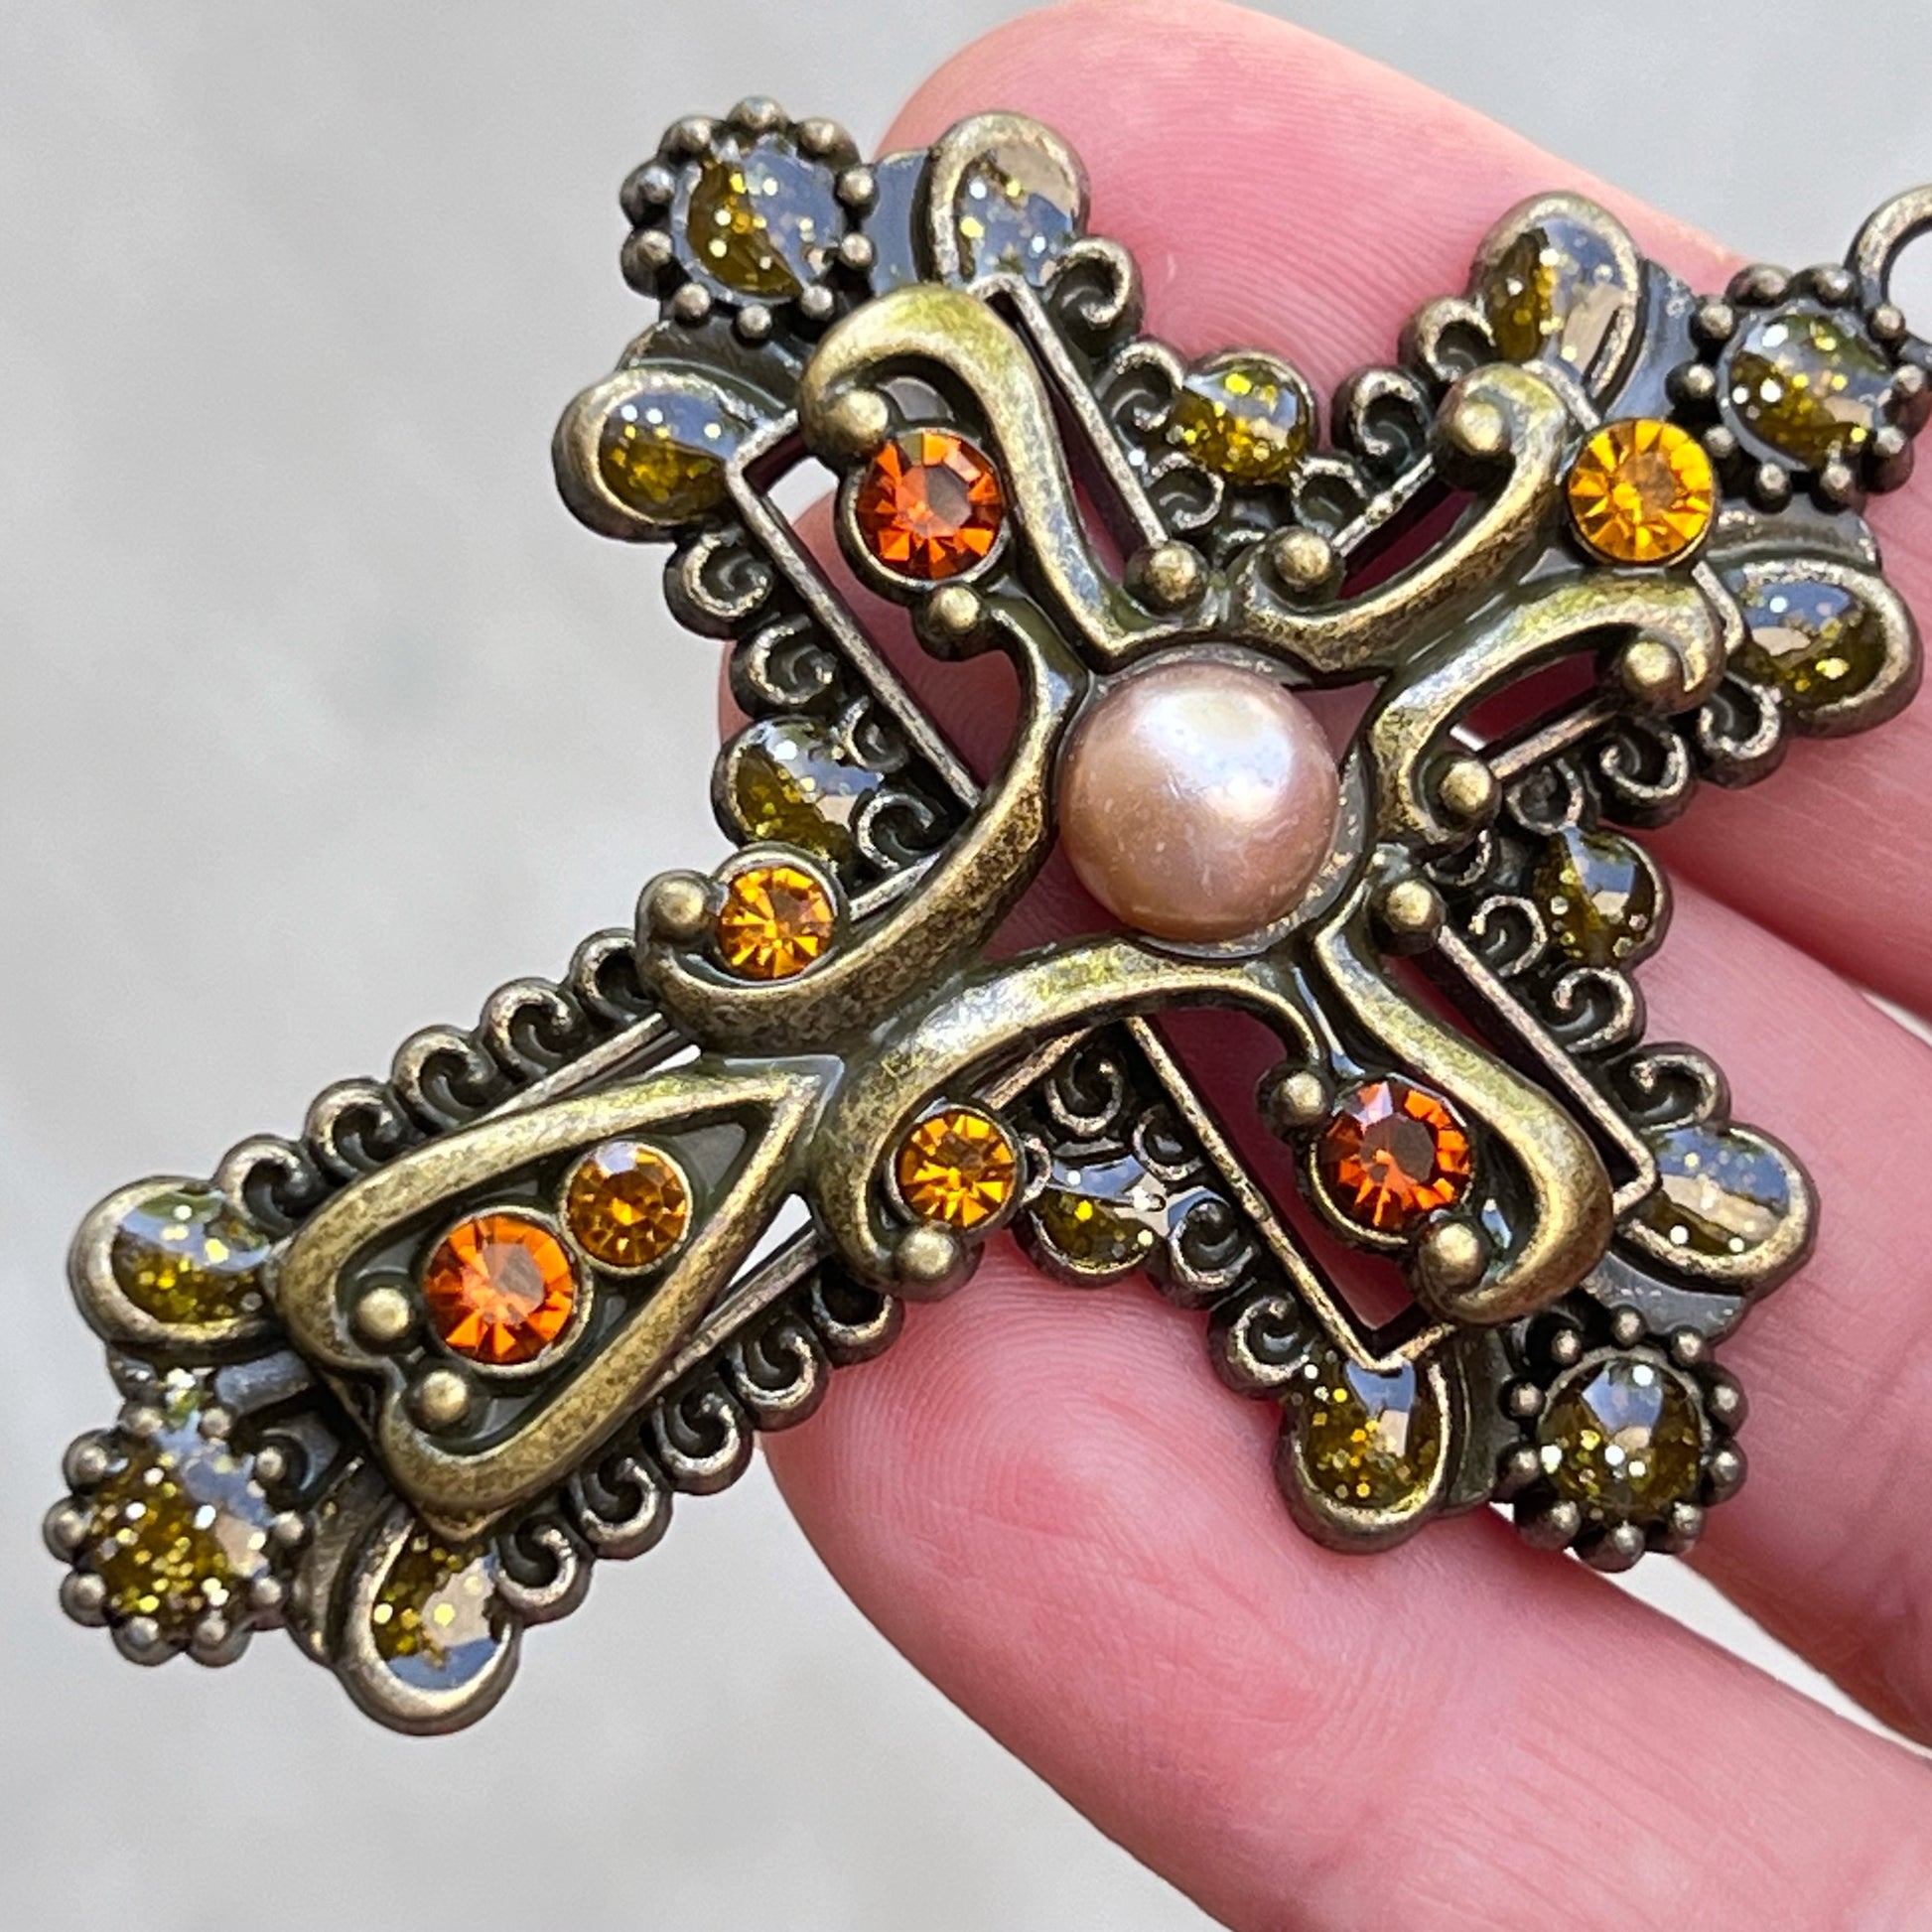 Ornate Brass Cross Rhinestone Western Zipper Pull Handbag Keychain Charm - Stylish and Elegant Accessory